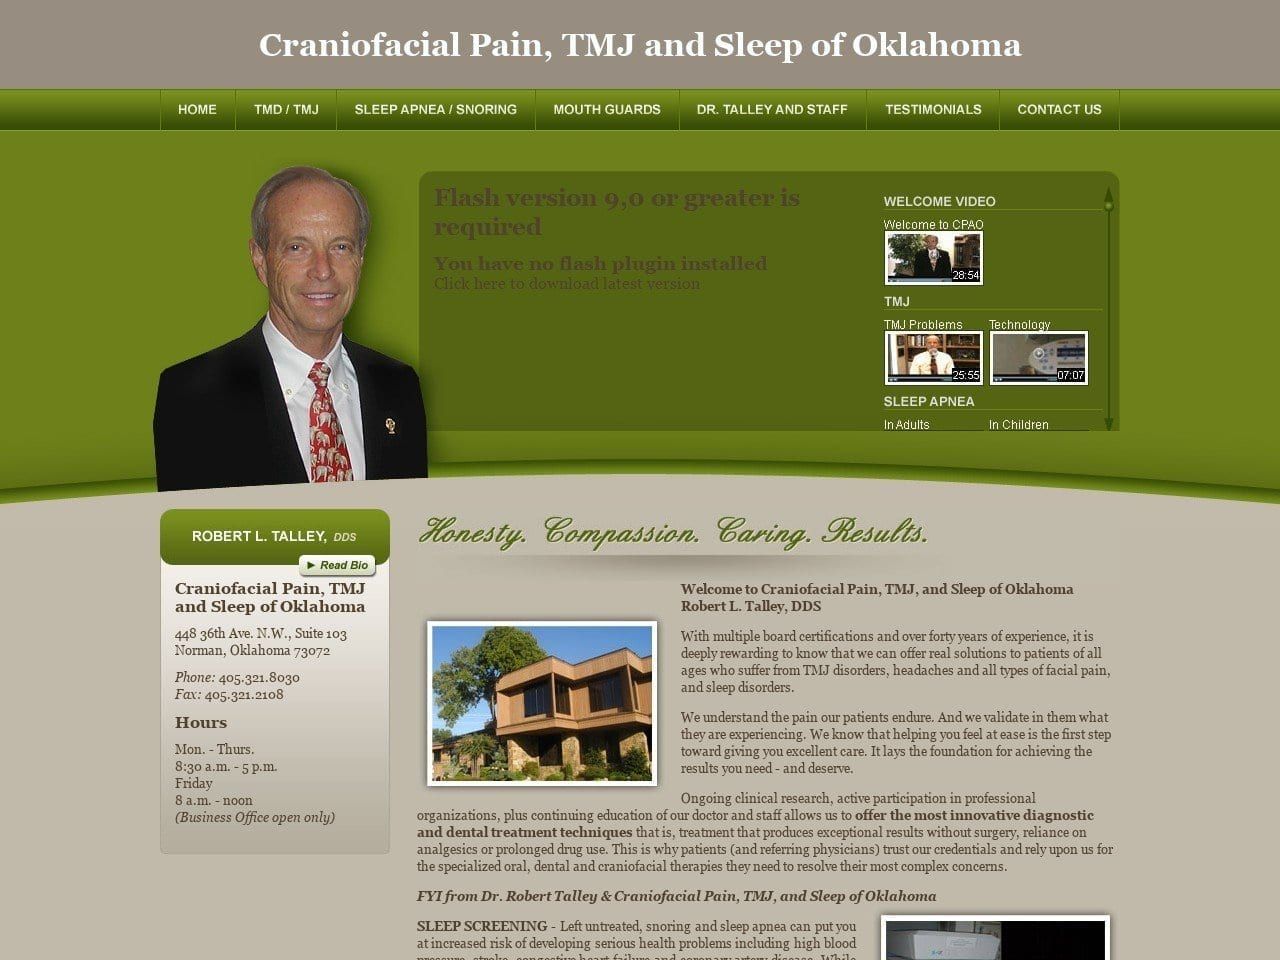 Craniofacial Pain Associates of Oklahoma Inc. Website Screenshot from tmj-pain.com